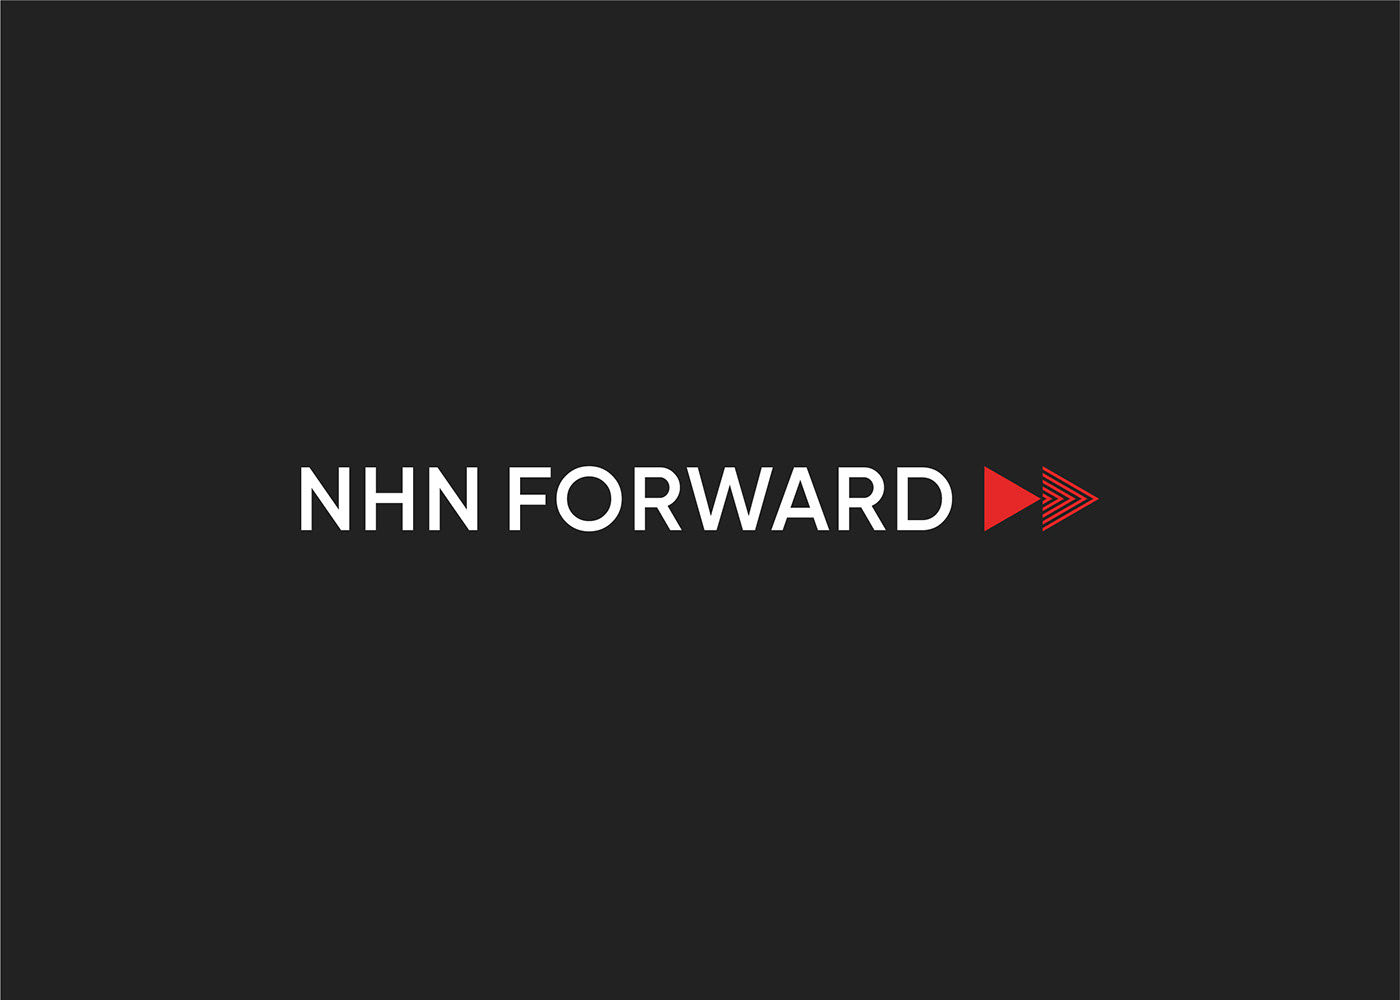 NHNFORWARD nhn forward conference branding  motiongraphic tech flexible identity